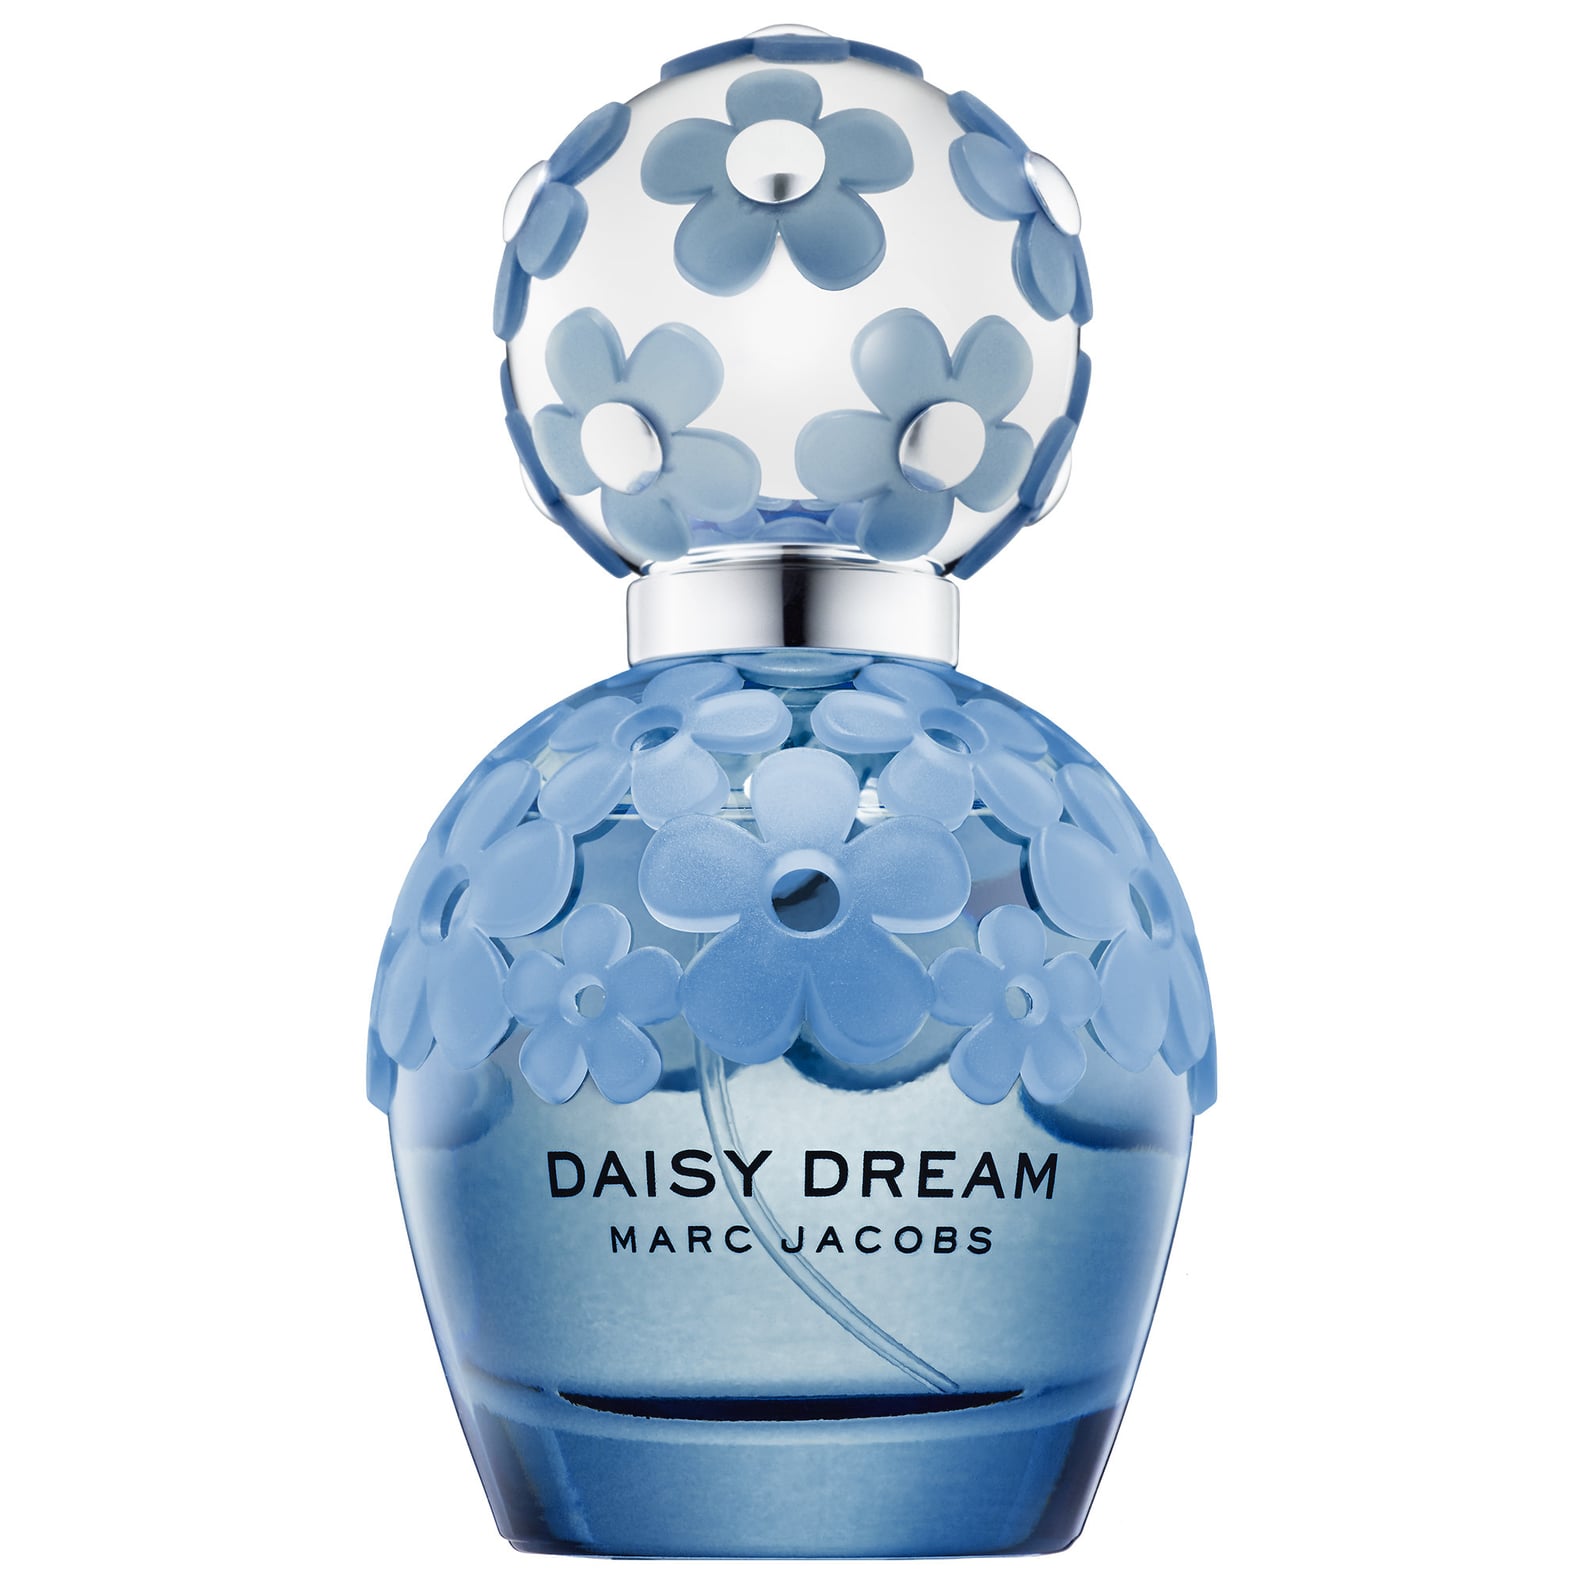 New Perfumes For Fall 2015 | POPSUGAR Beauty